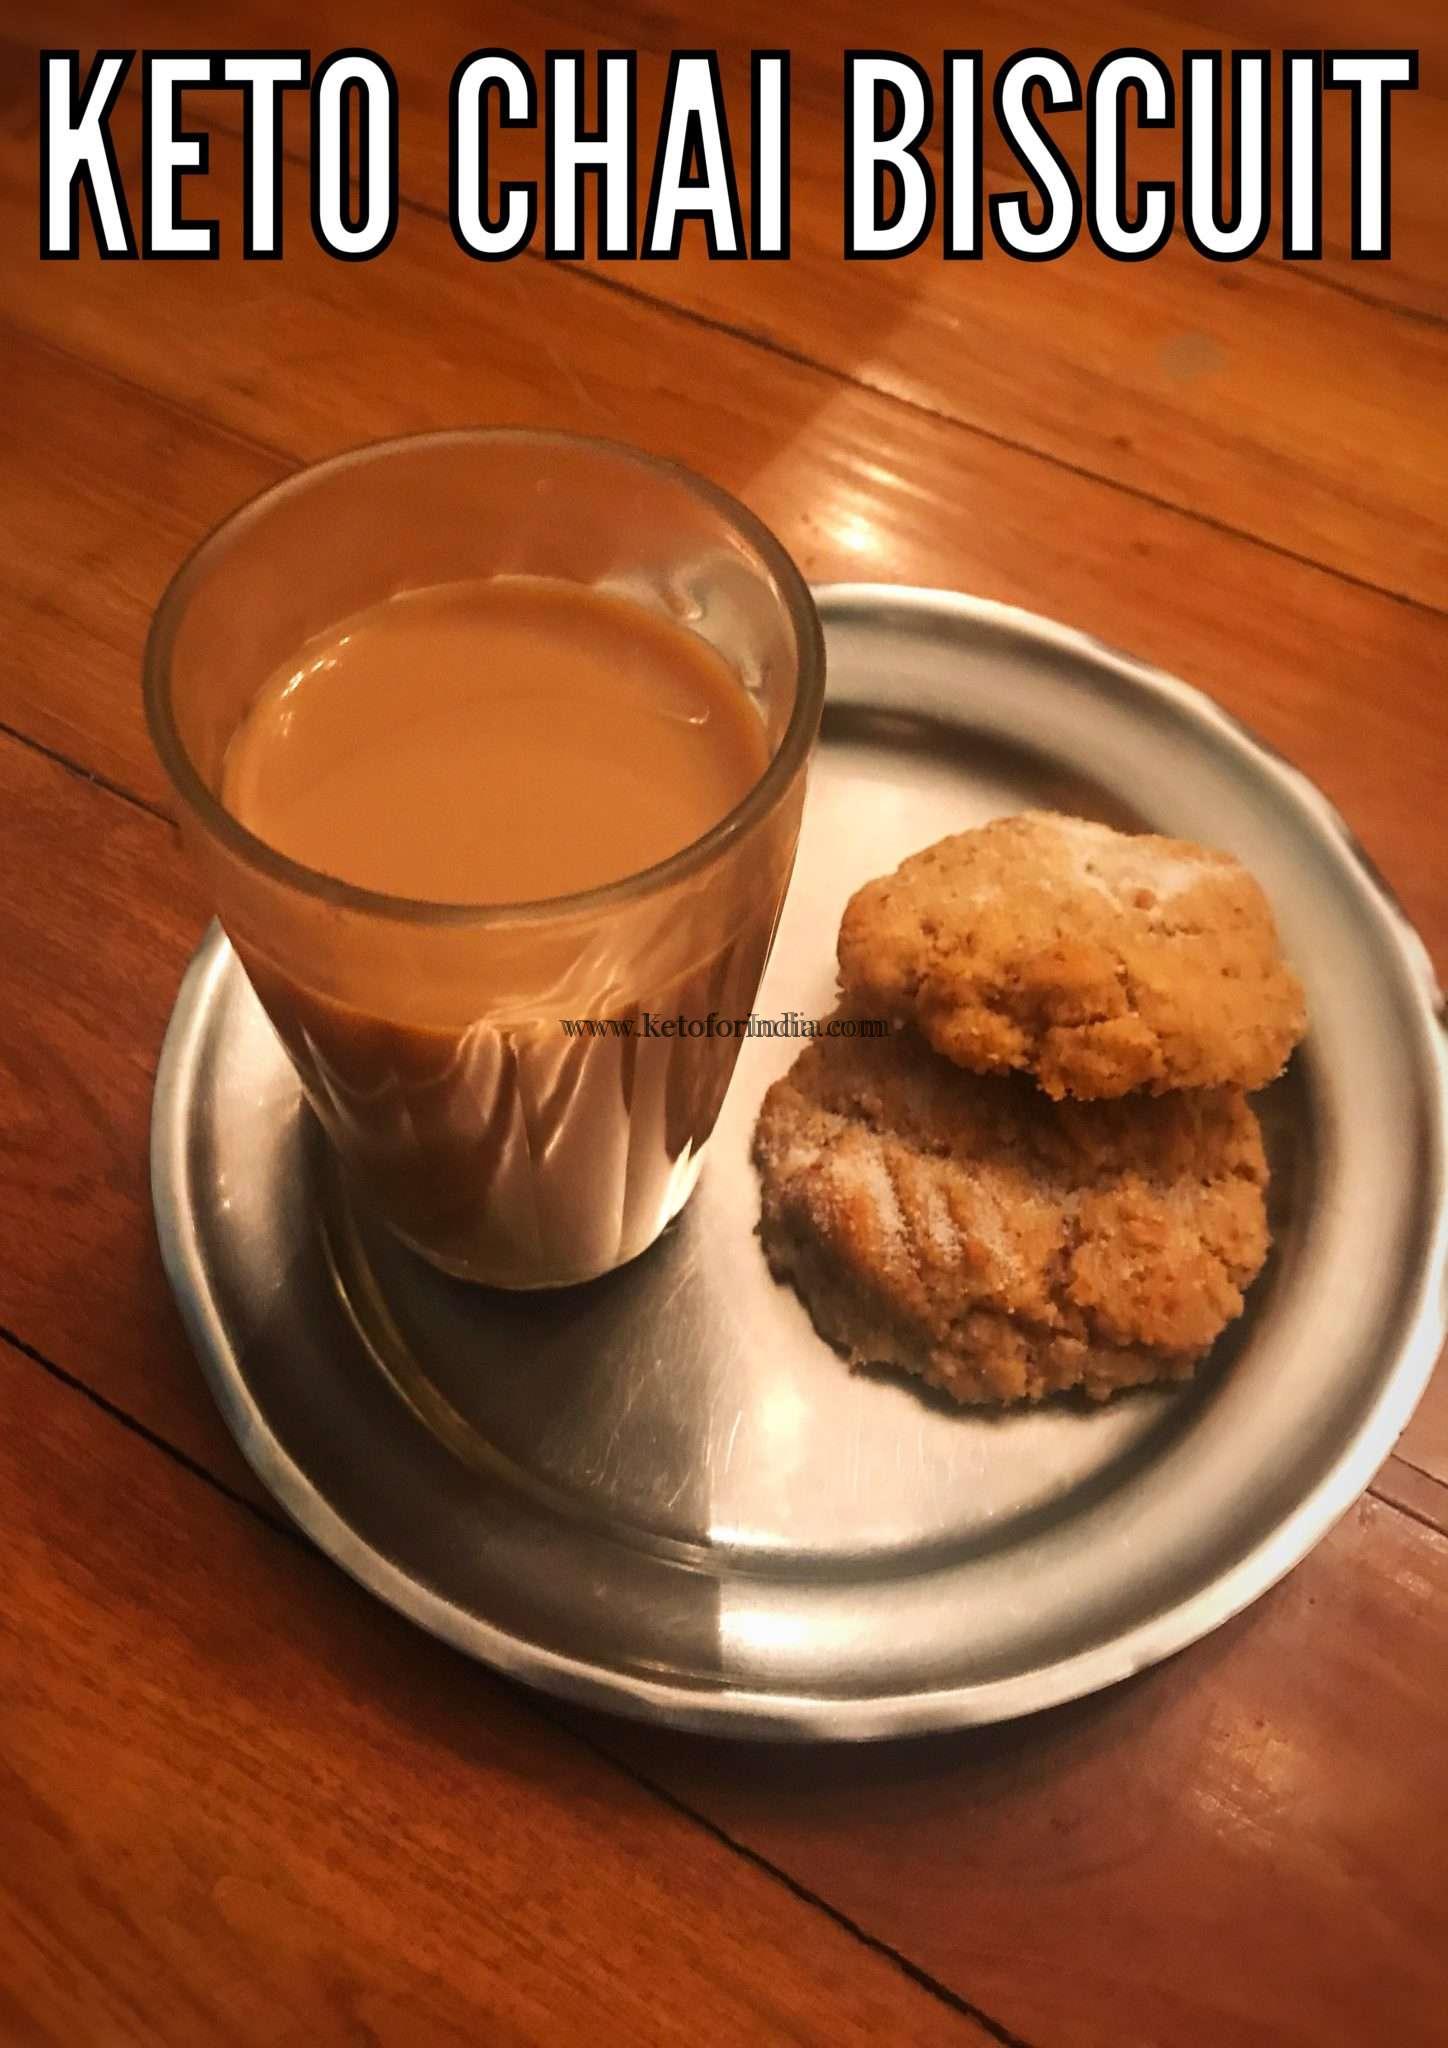 keto hindi, Keto for india, keto india, #Keto Chai and Biscuit, keto biscuit, keto chai, desi keto